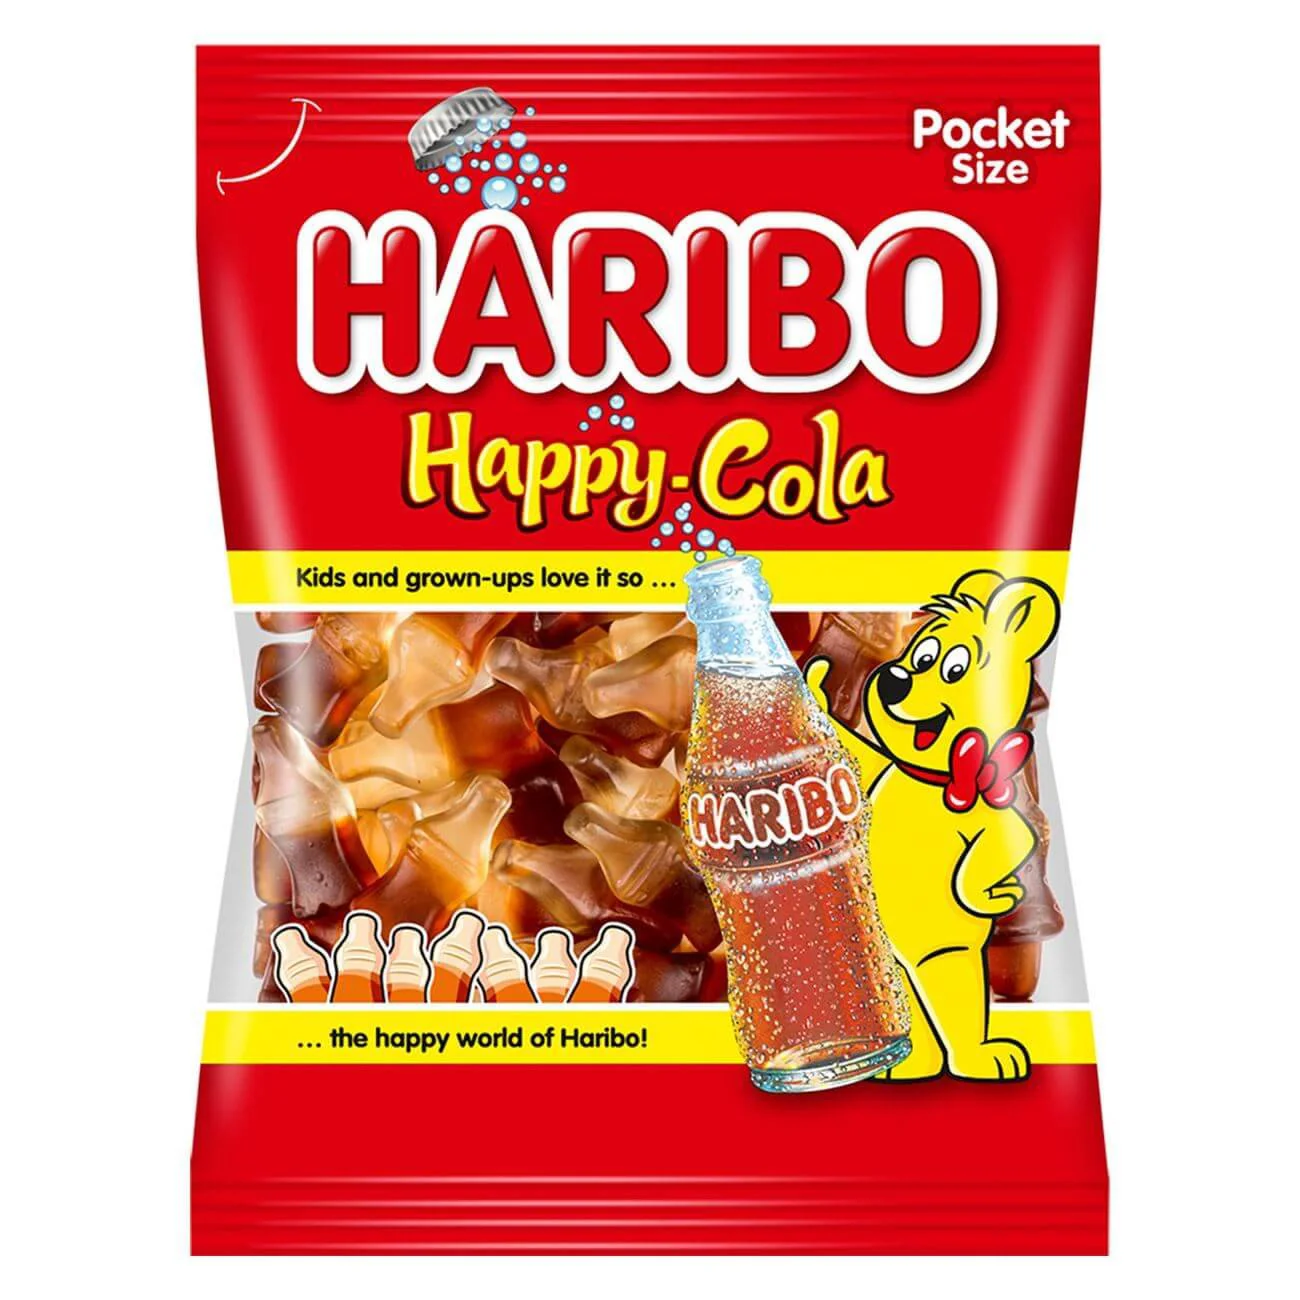 Jeleuri Haribo Happy-Cola, 100 g